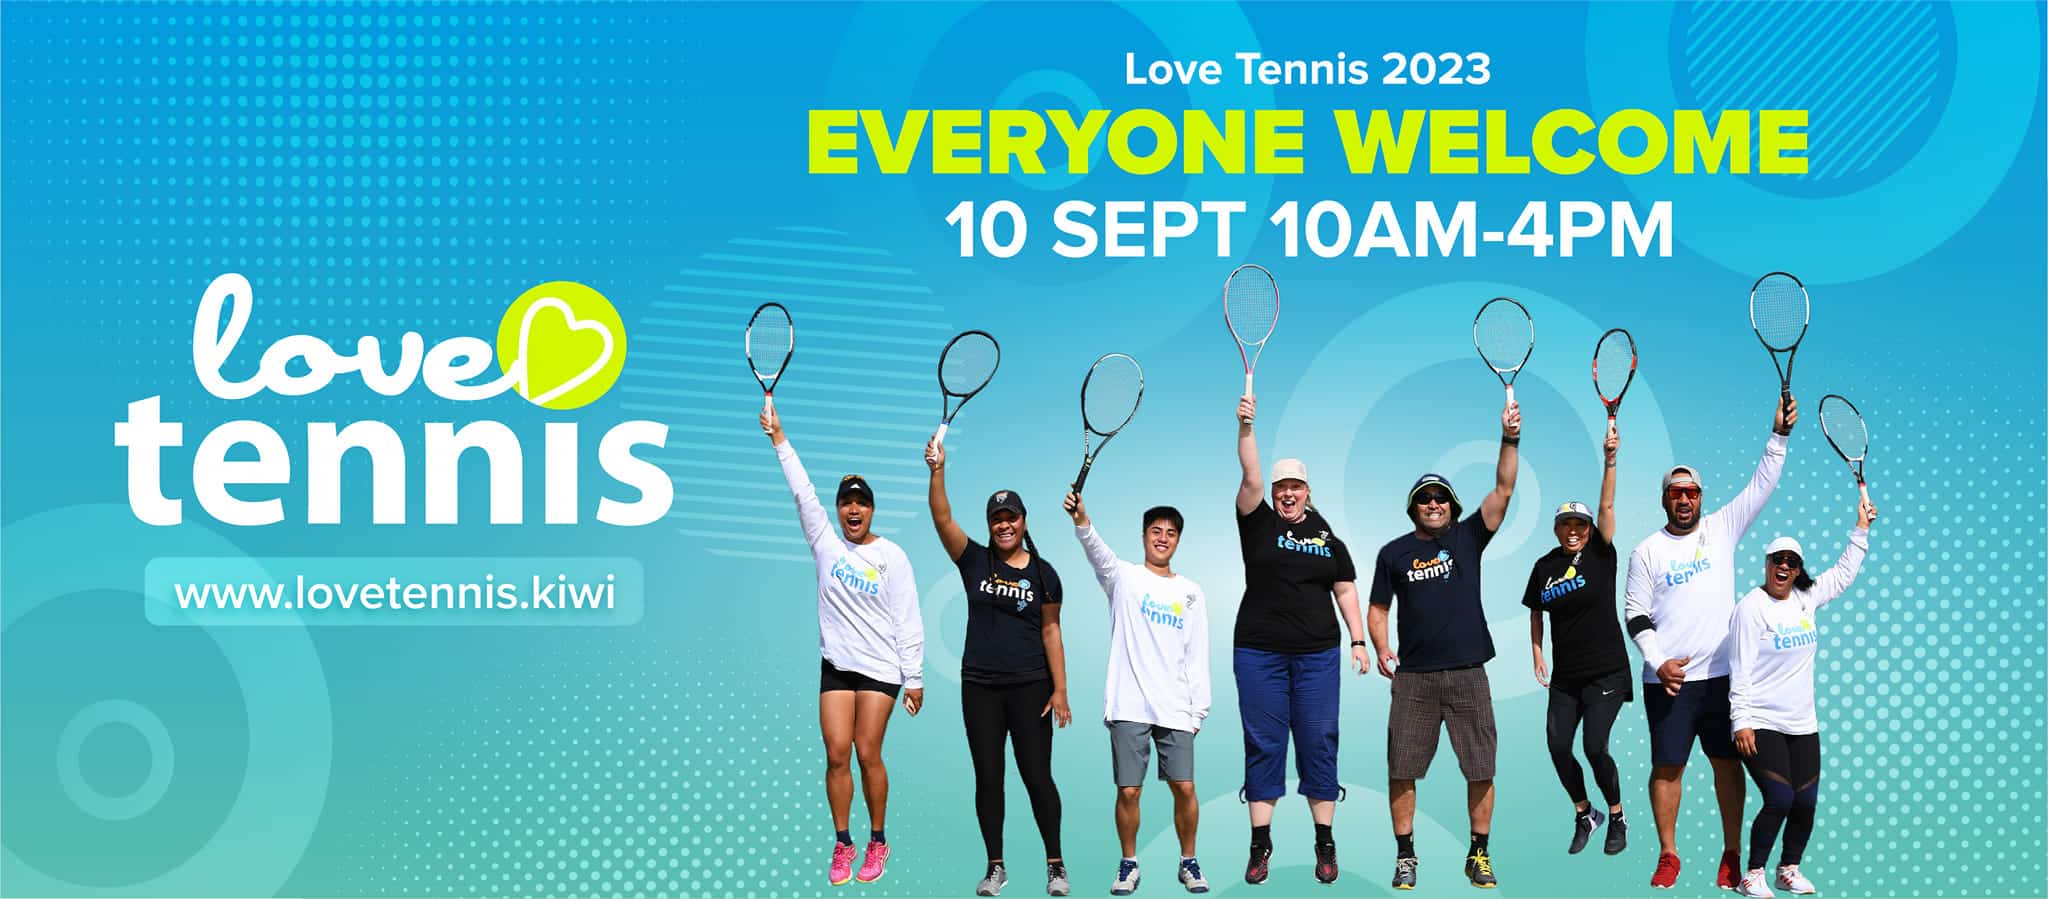 Love Tennis event in New Zealand